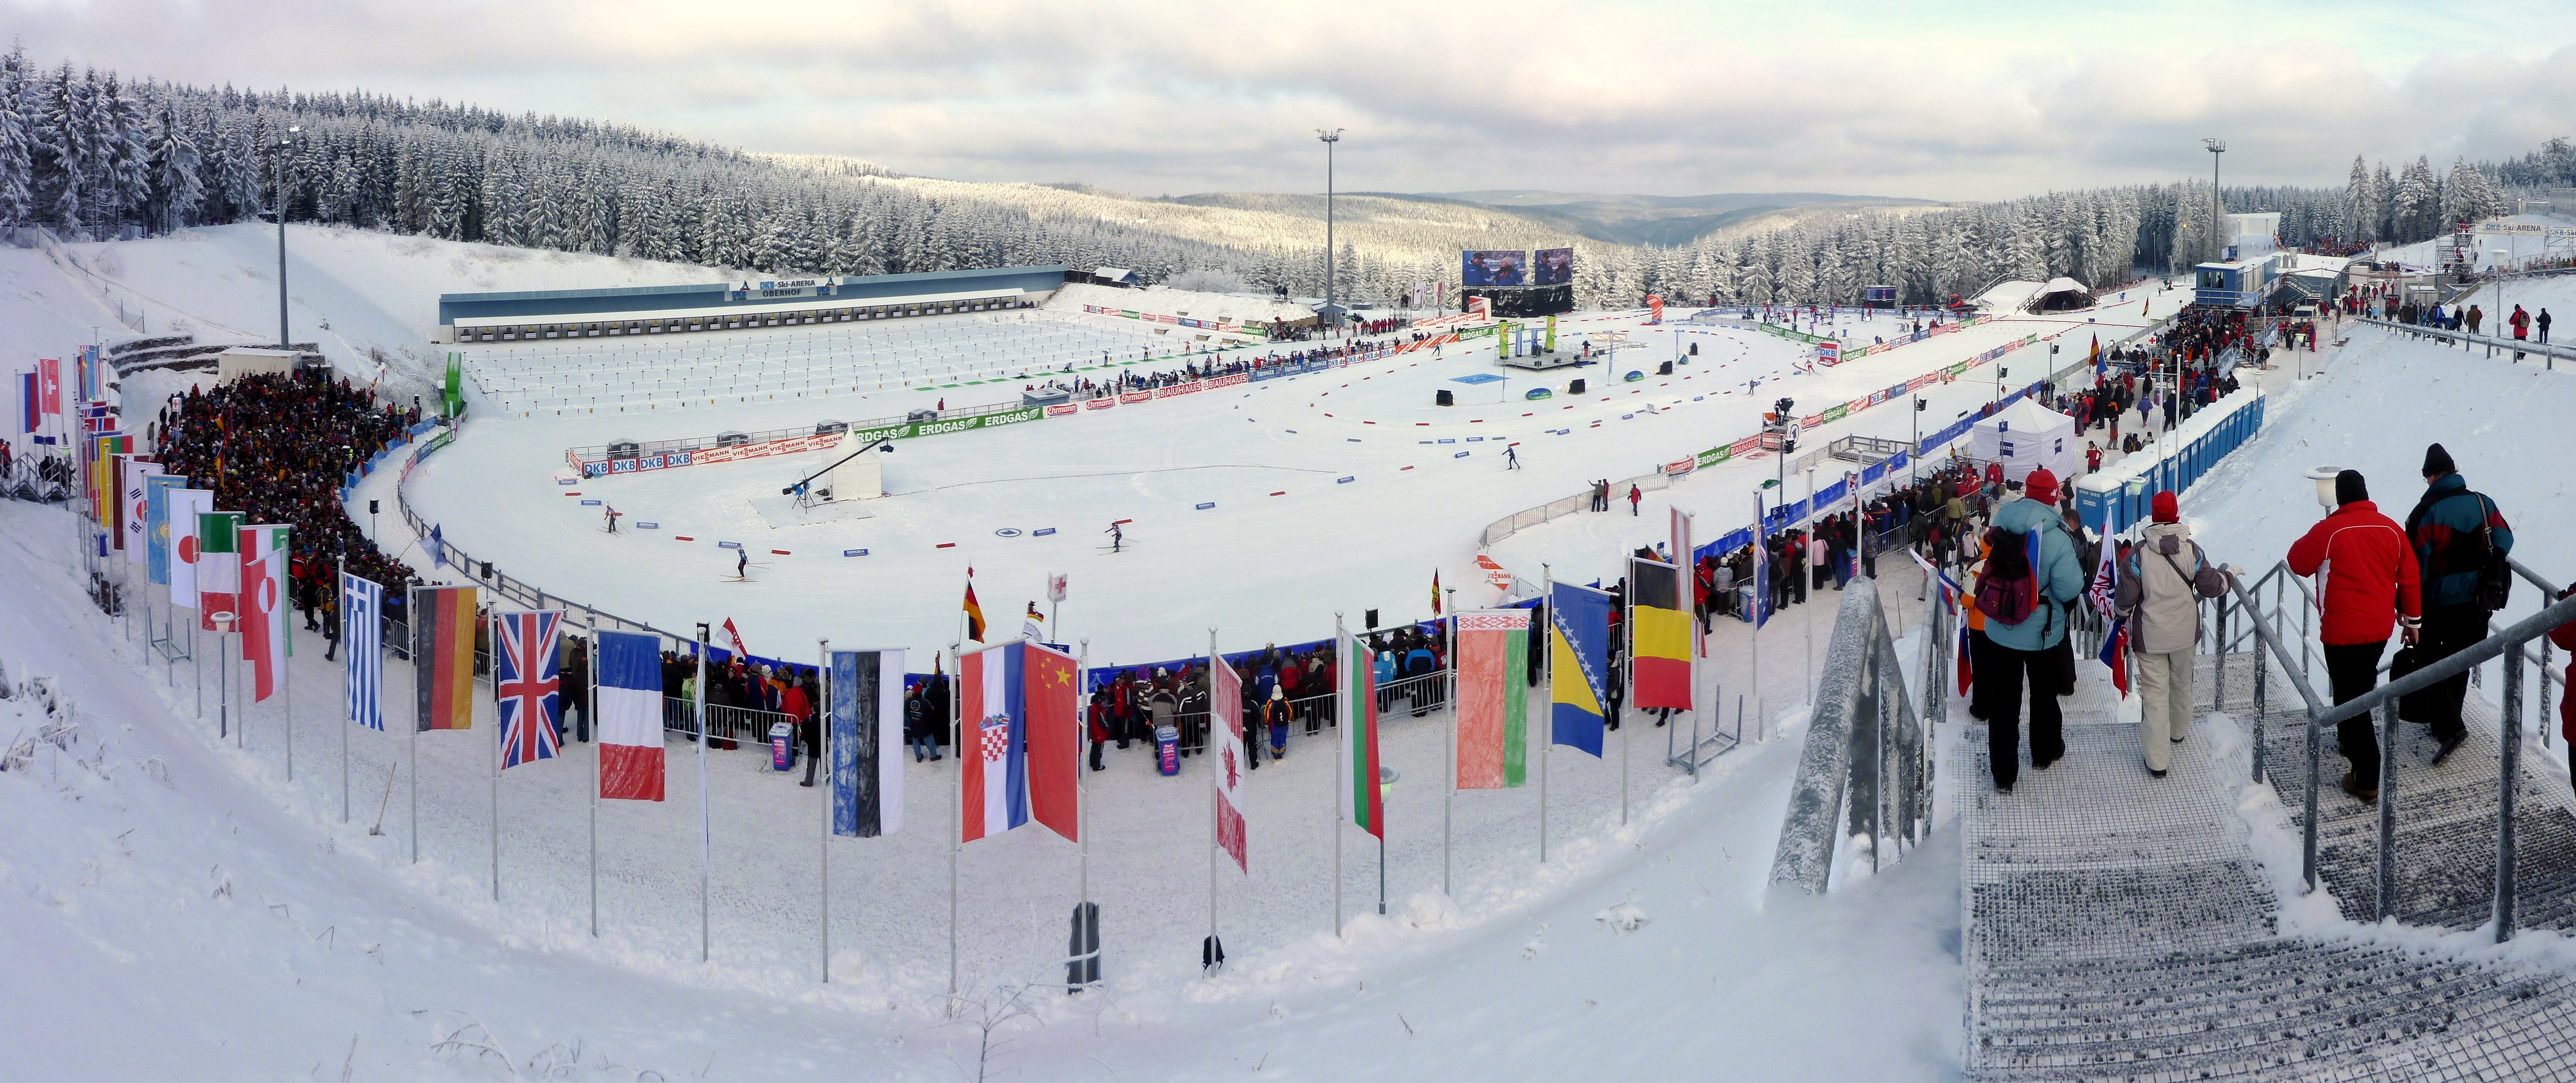 Biathlon Arena Oberhof